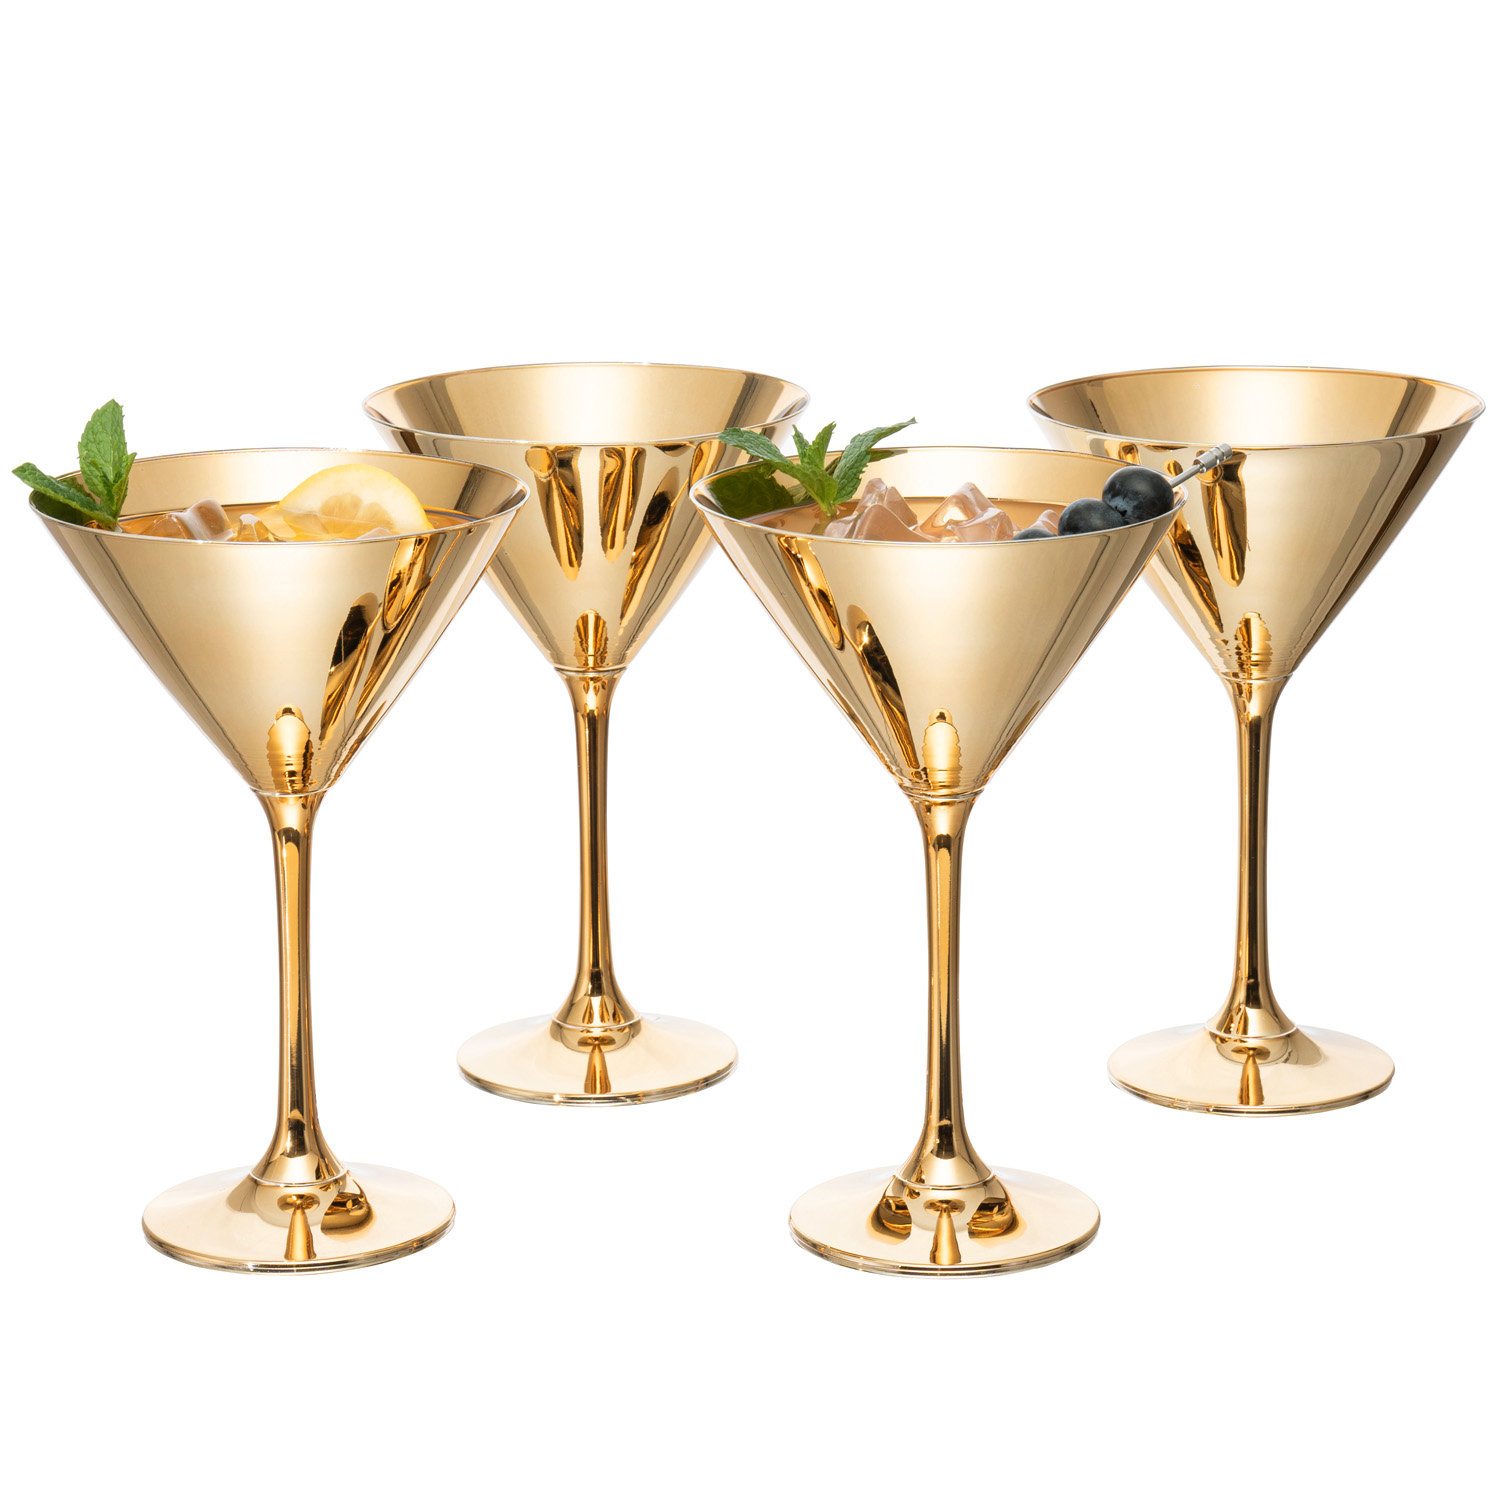 Everly Quinn 2 Piece 8 oz. Martini Glasses Set